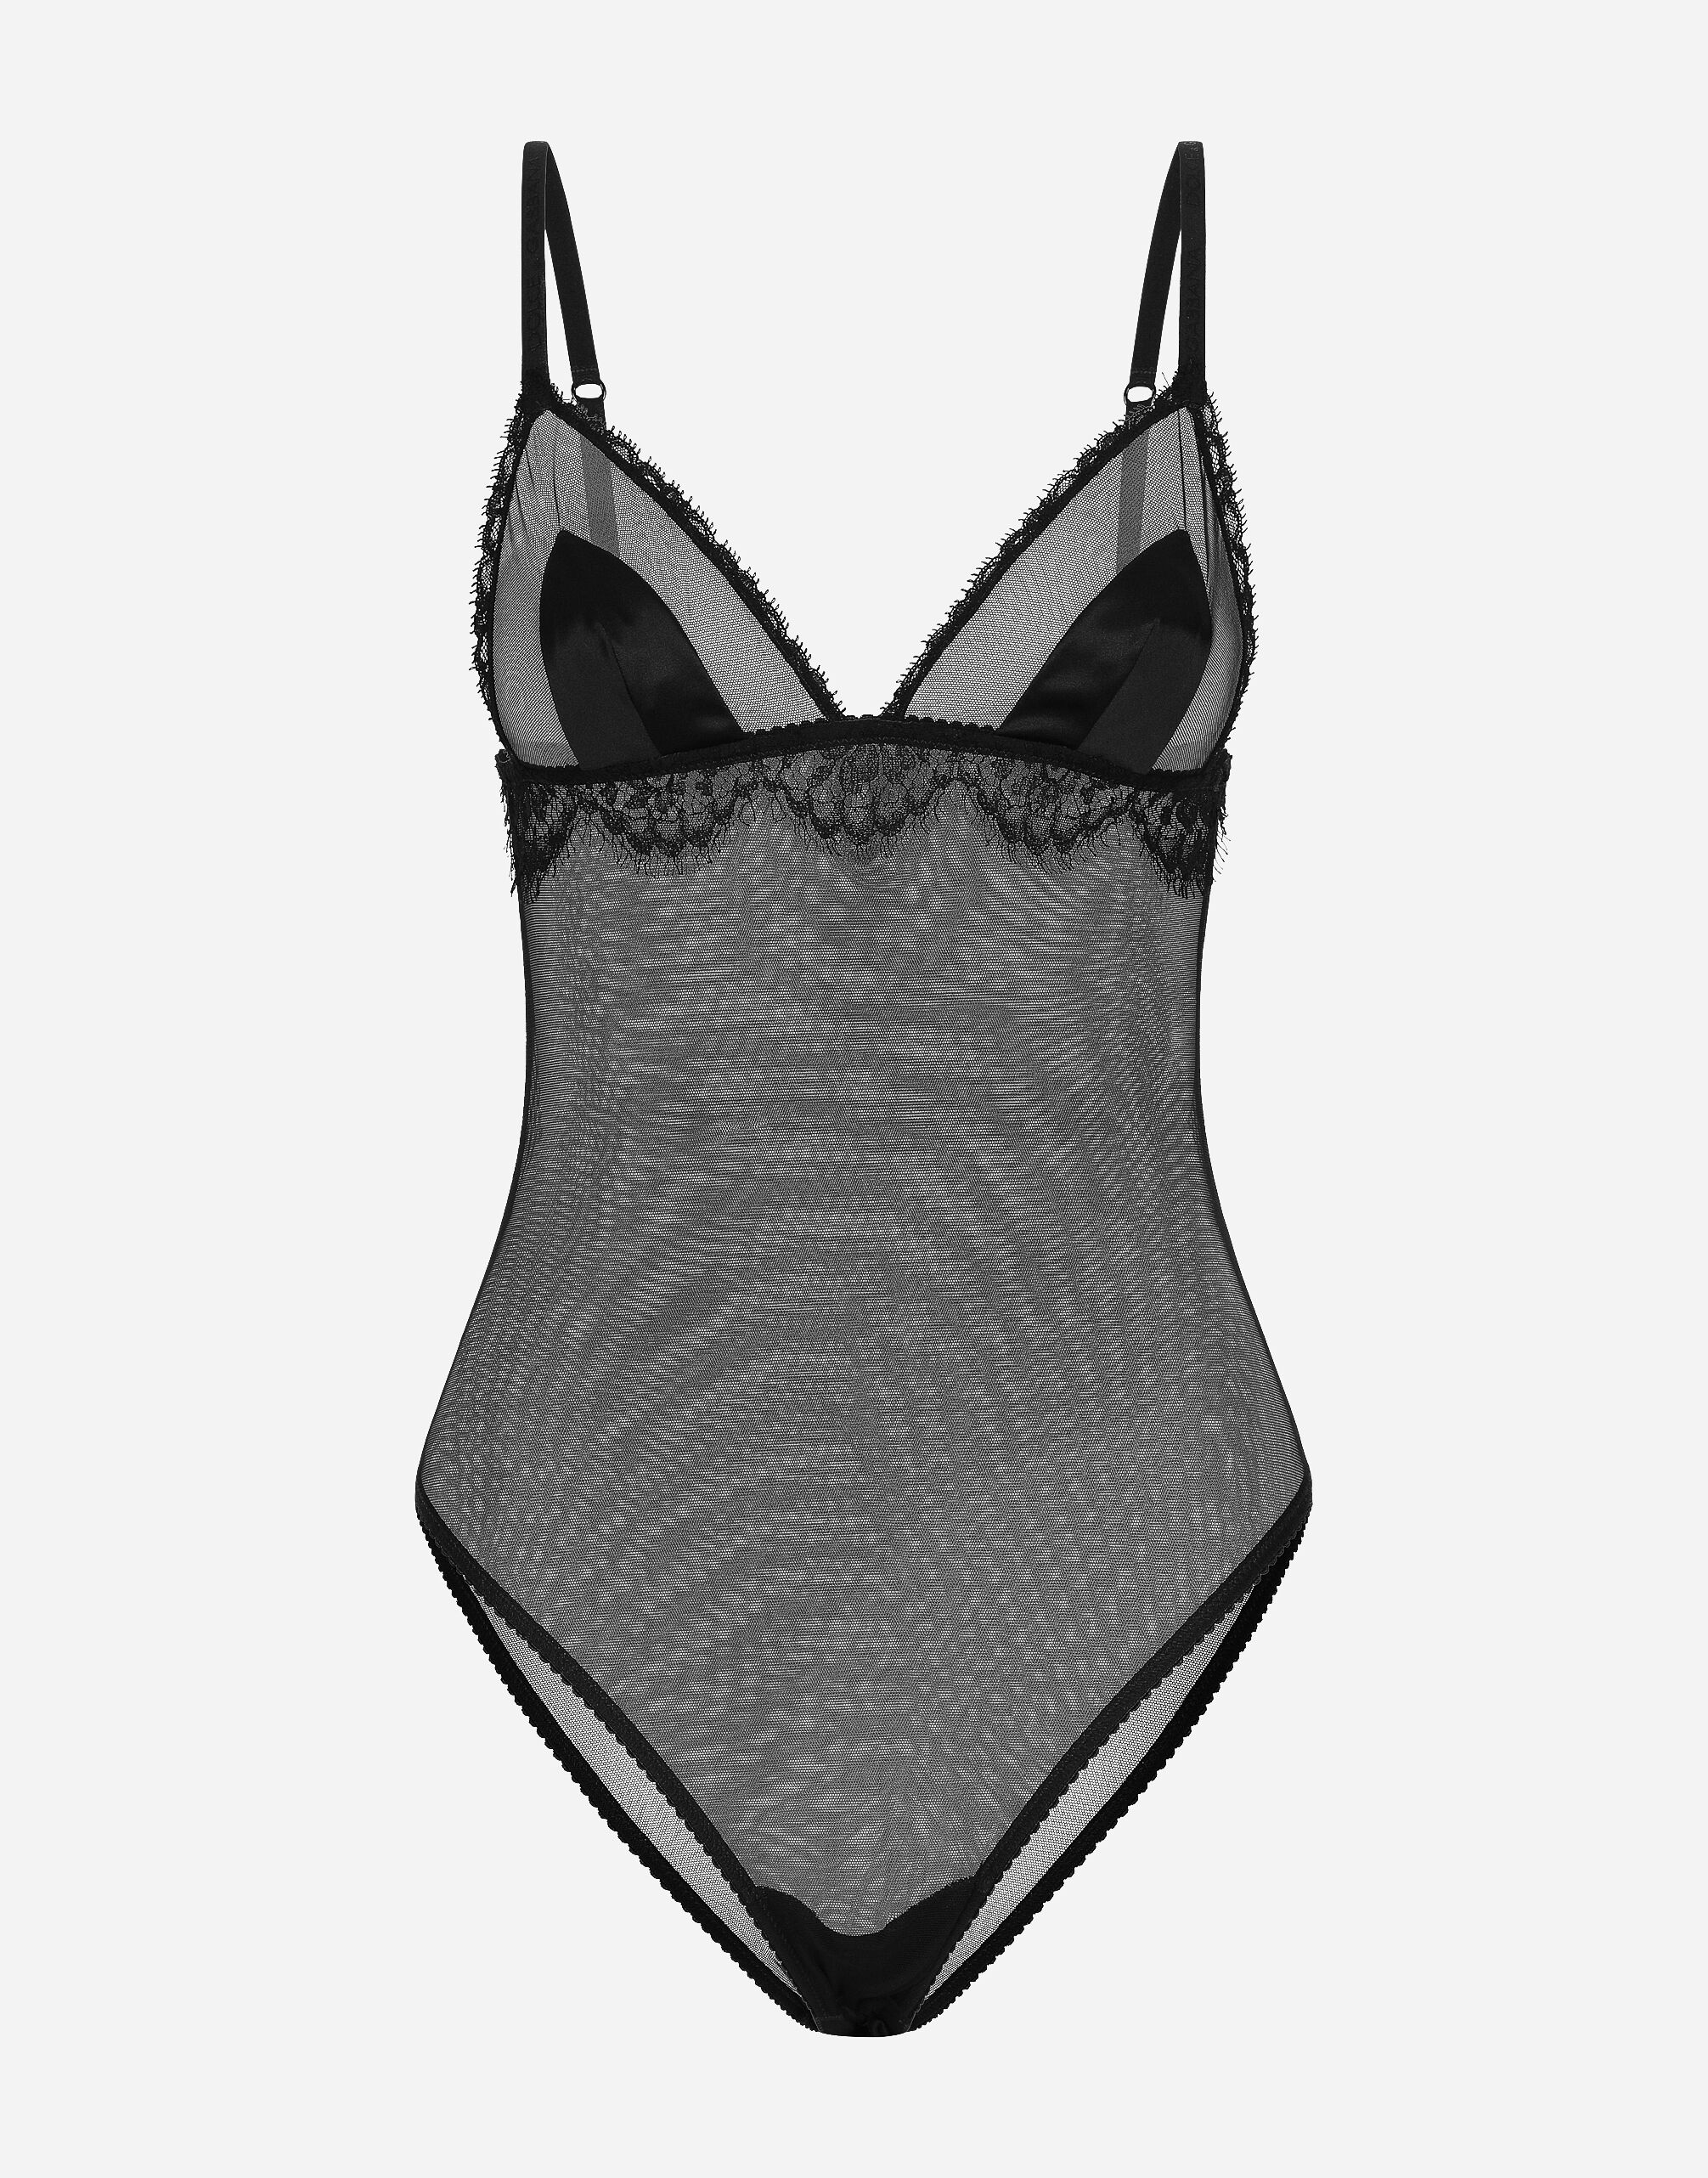 Dolce&Gabbana® Women's Underwear : luxury lingerie | D&G ®